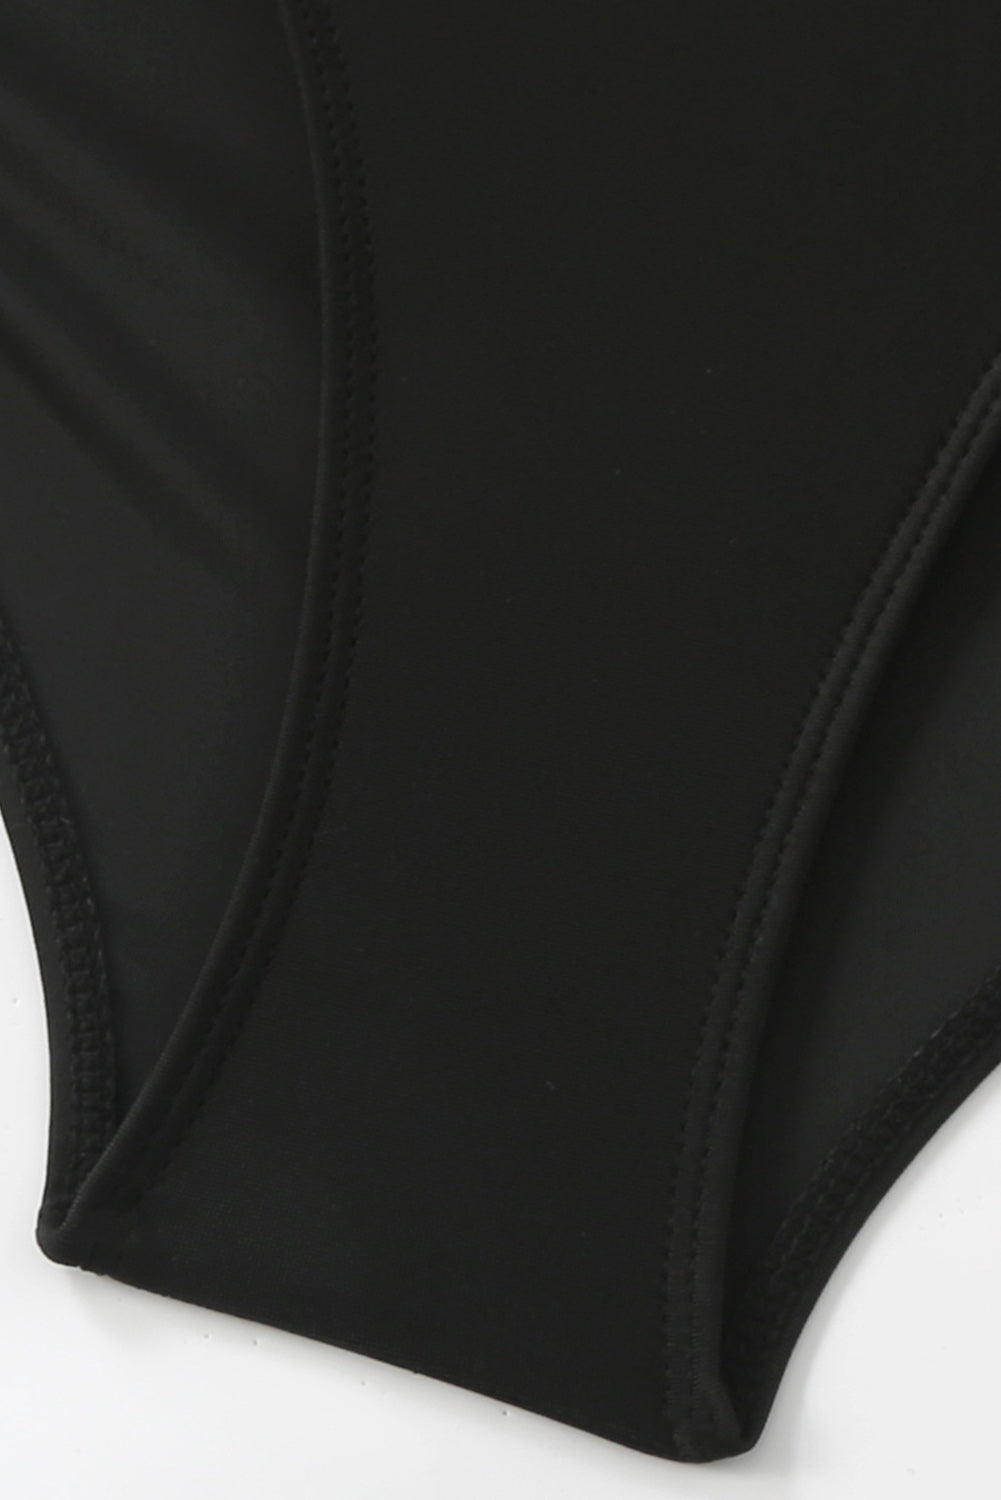 Black Mesh Cutout Ruched Drawstring Monokini Swimsuit